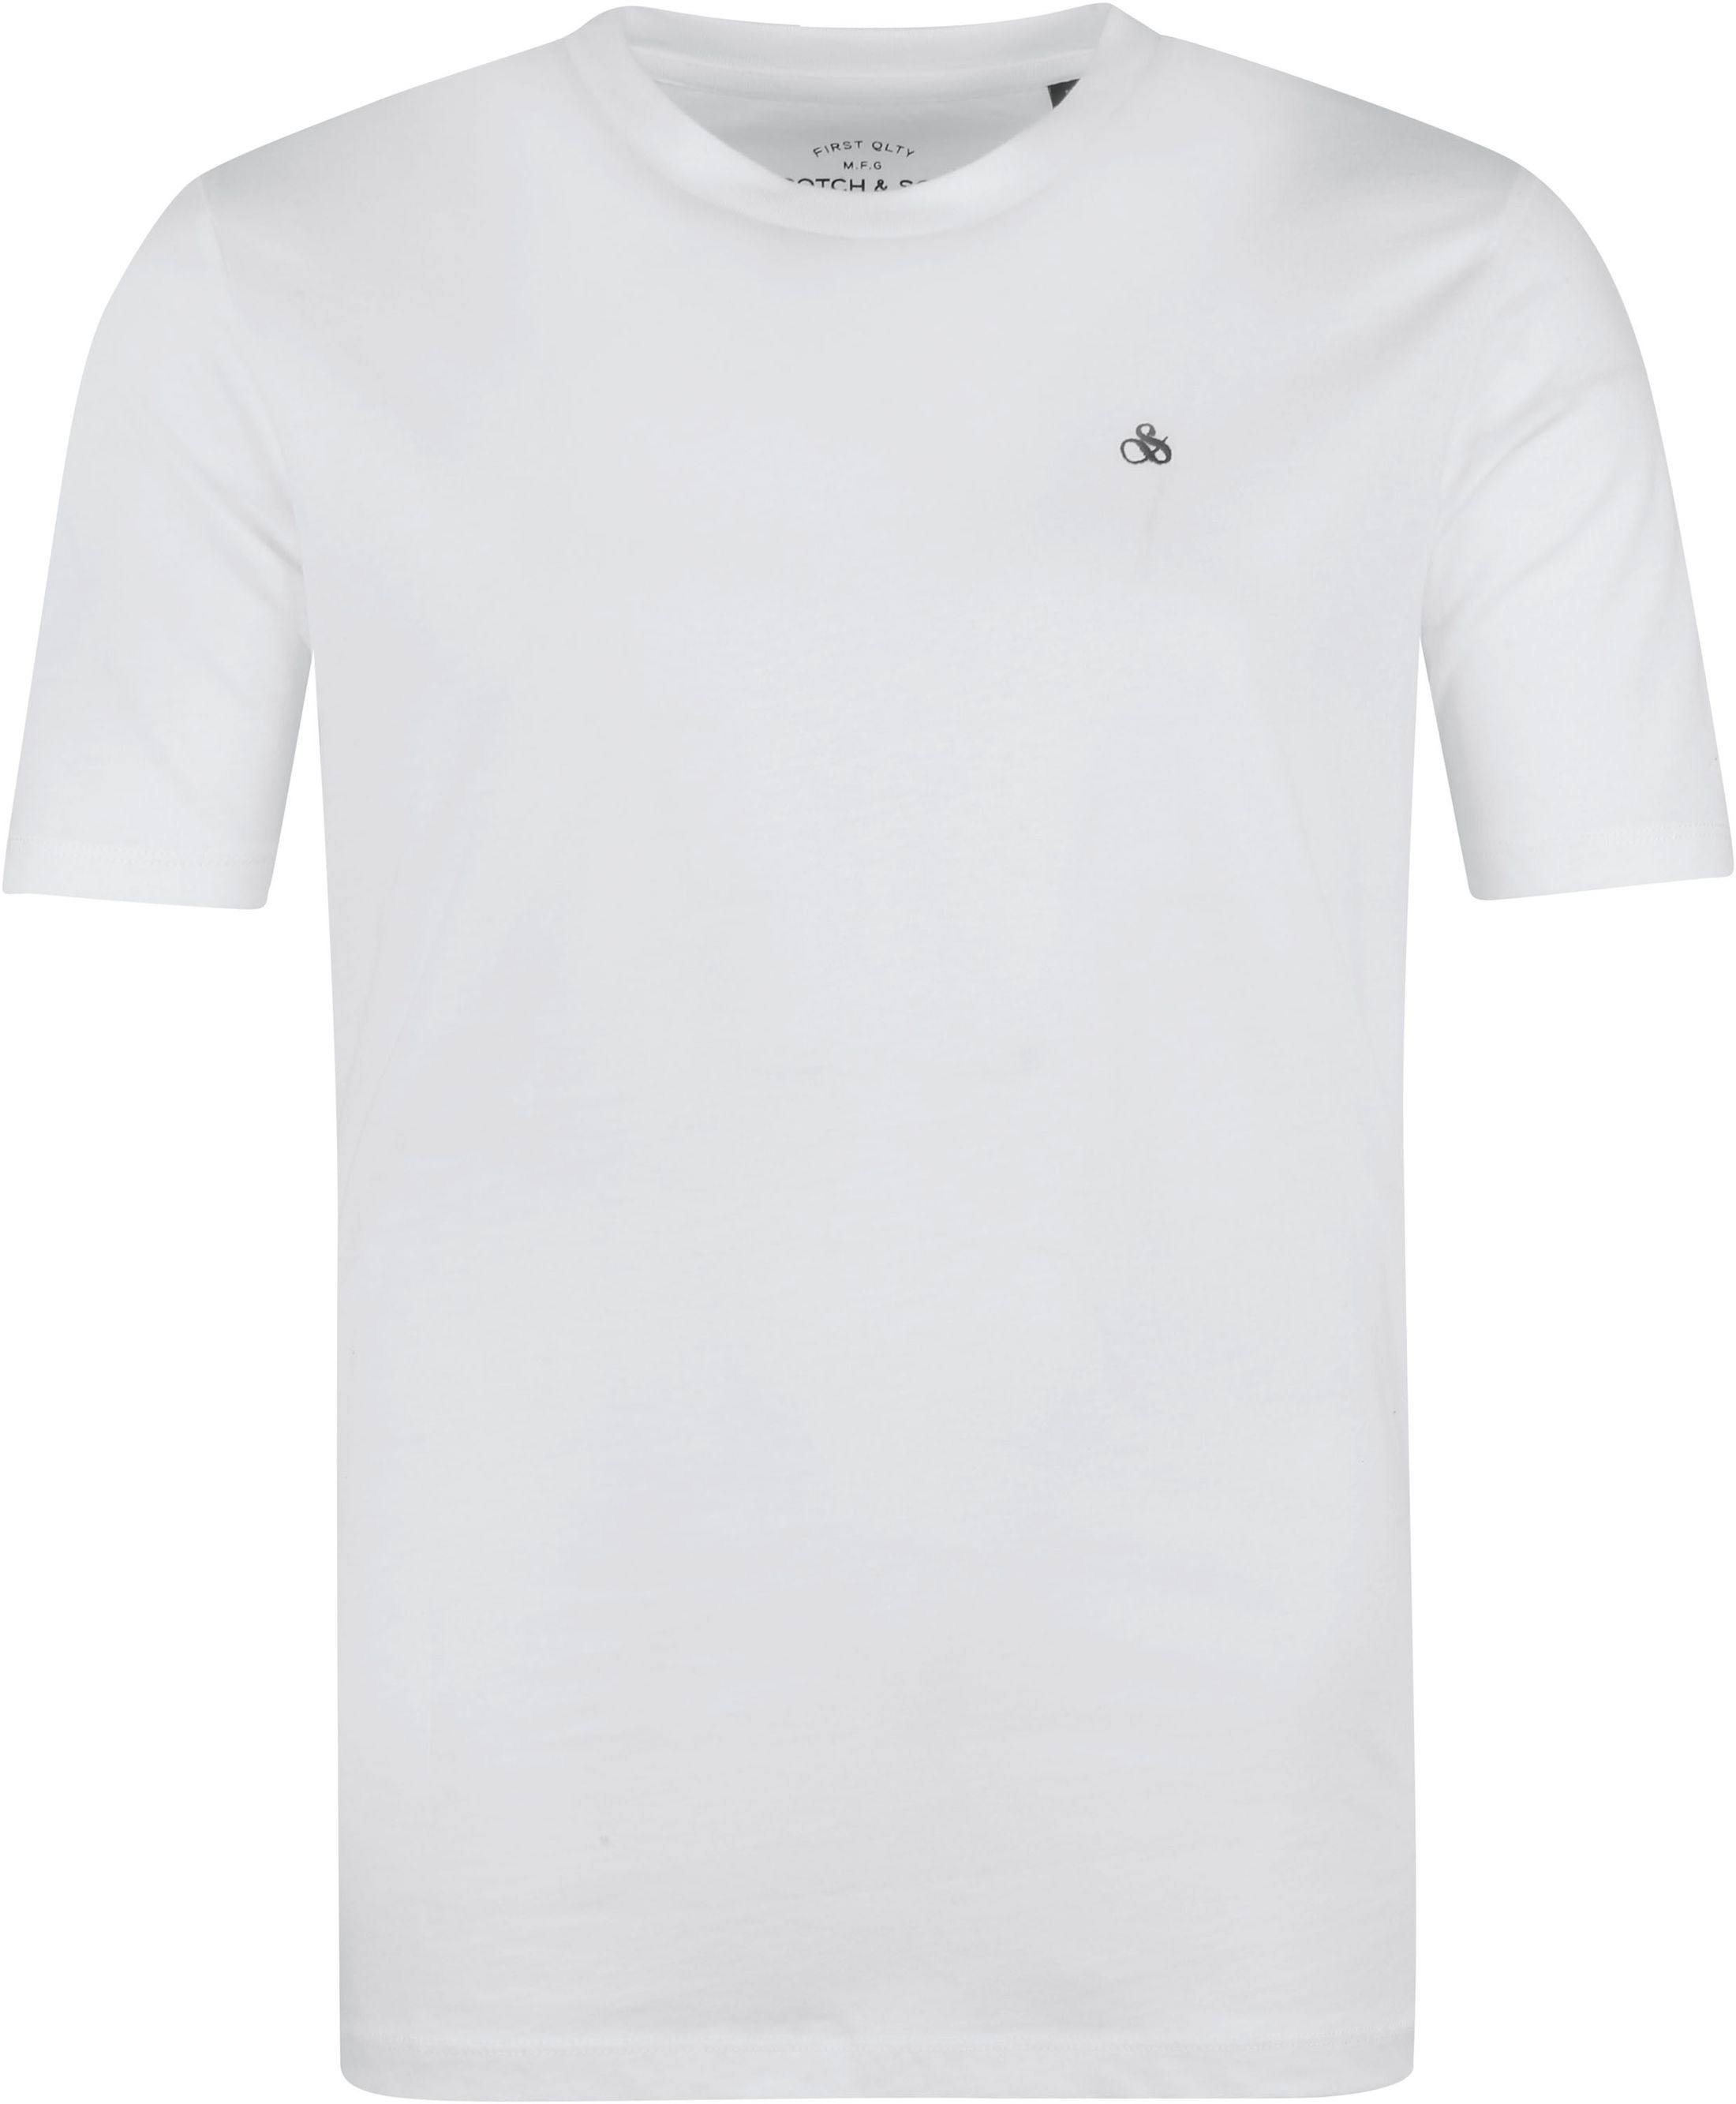 Scotch & Soda T-Shirt Jersey Sand Off-White size XL